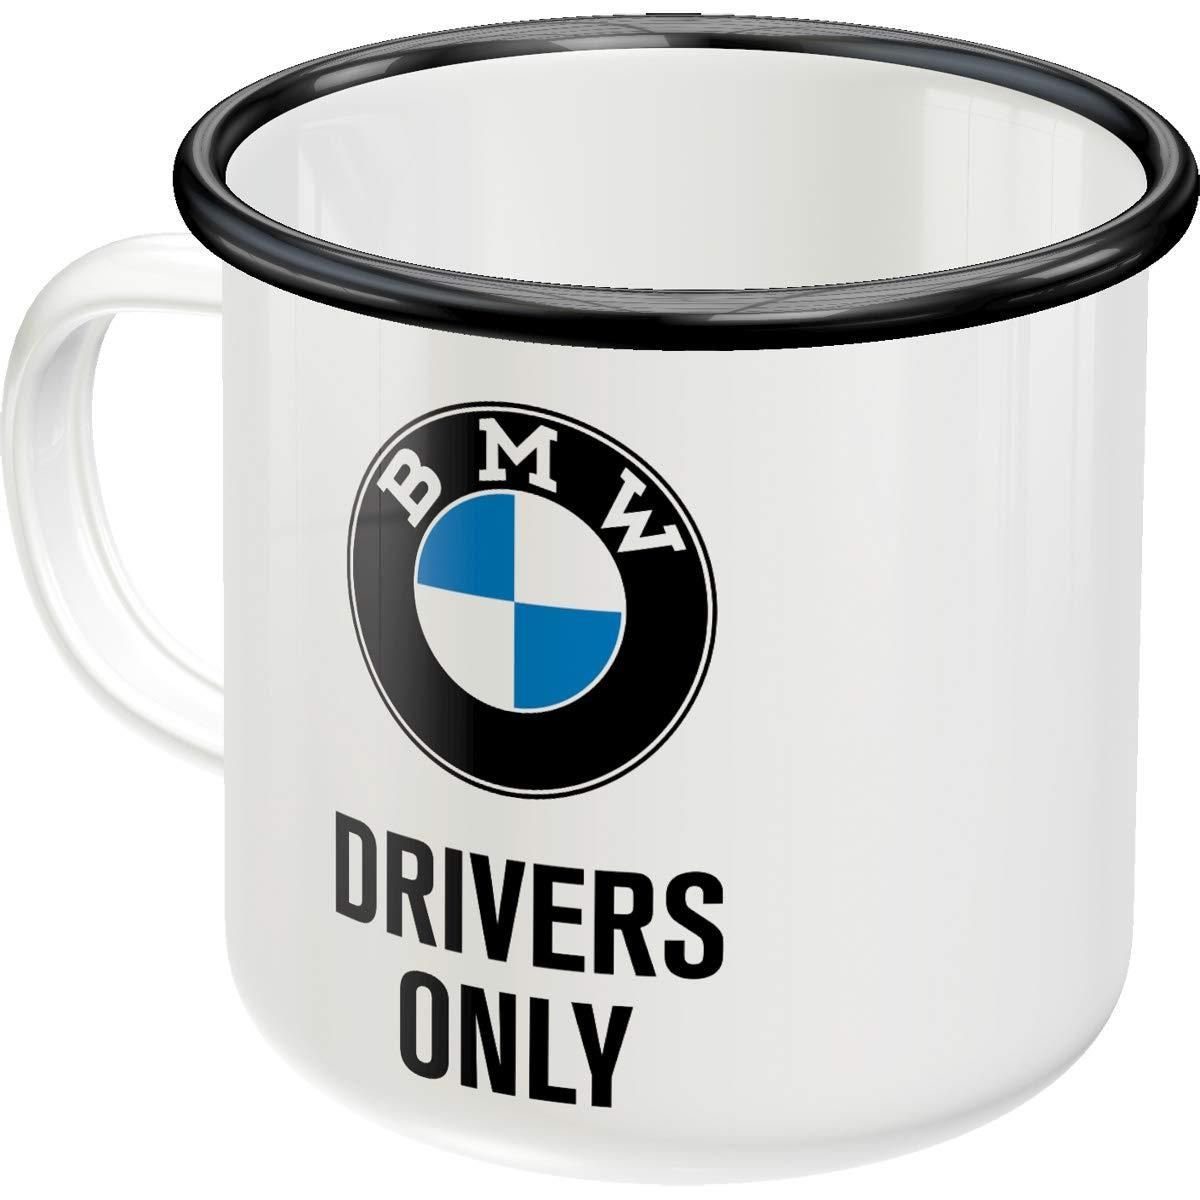 Emaille-Becher - Tasse BMW Only Nostalgic-Art Drivers BMW -